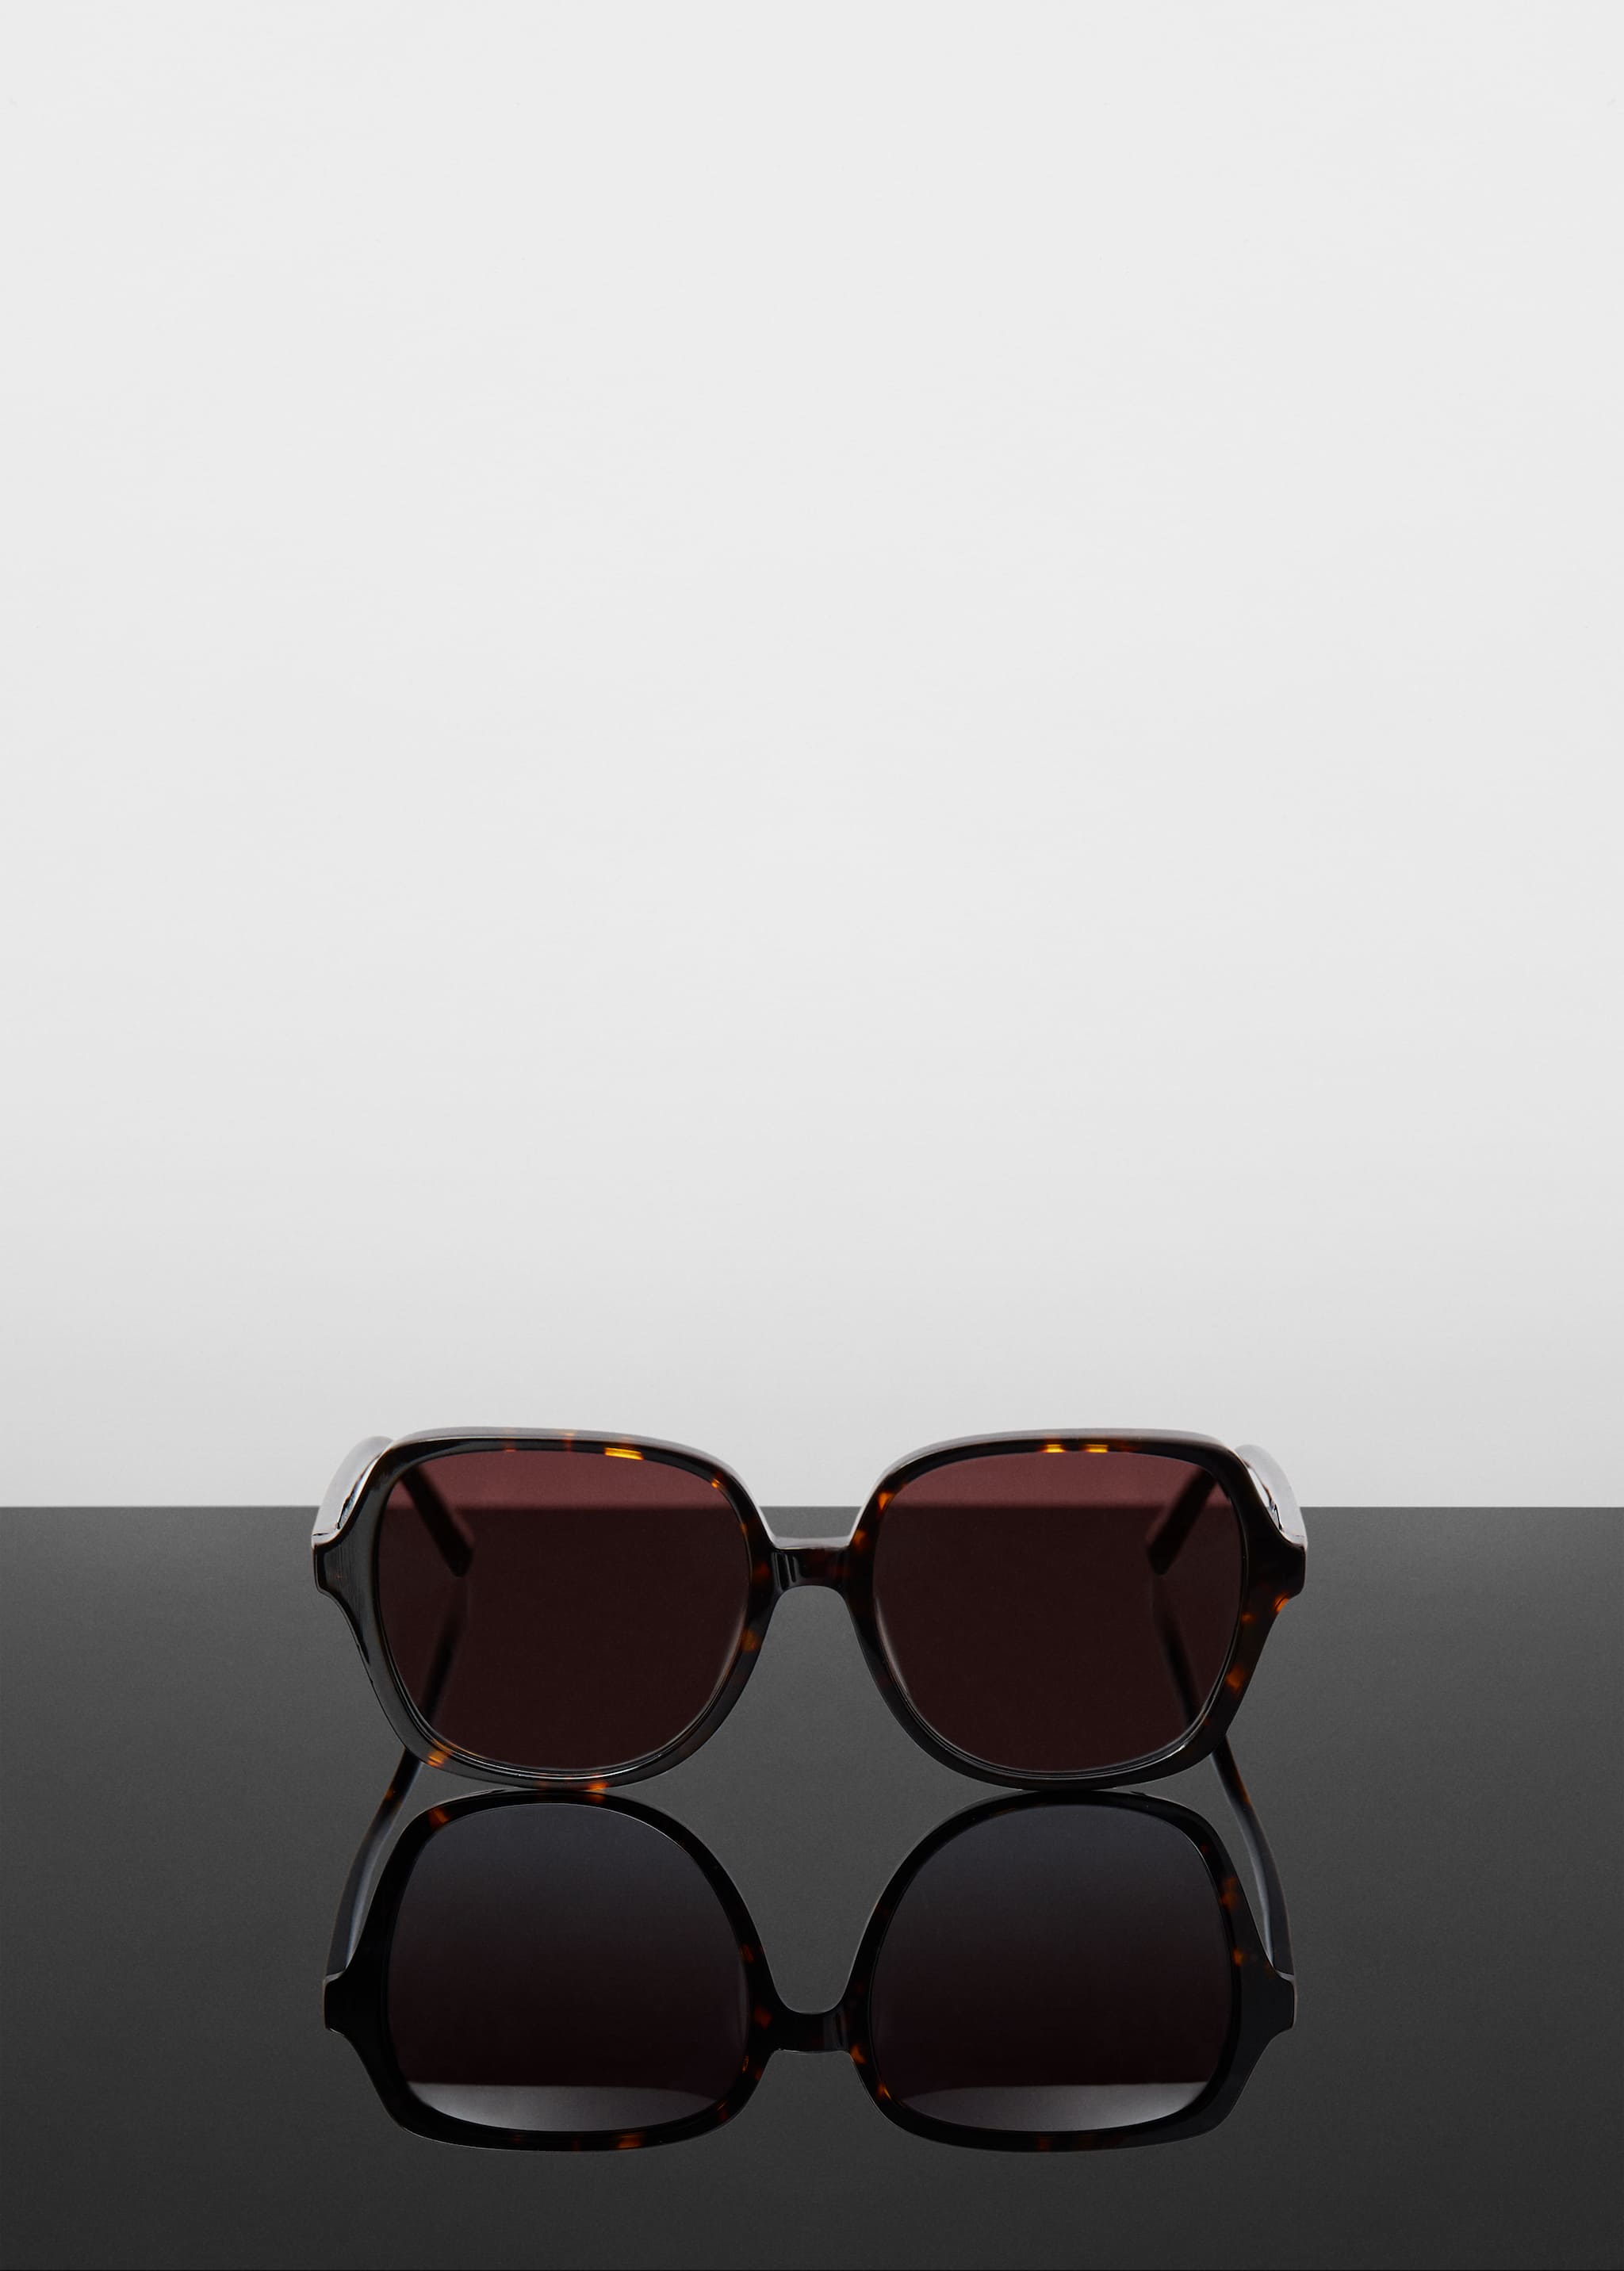 Tortoiseshell square sunglasses - Article without model